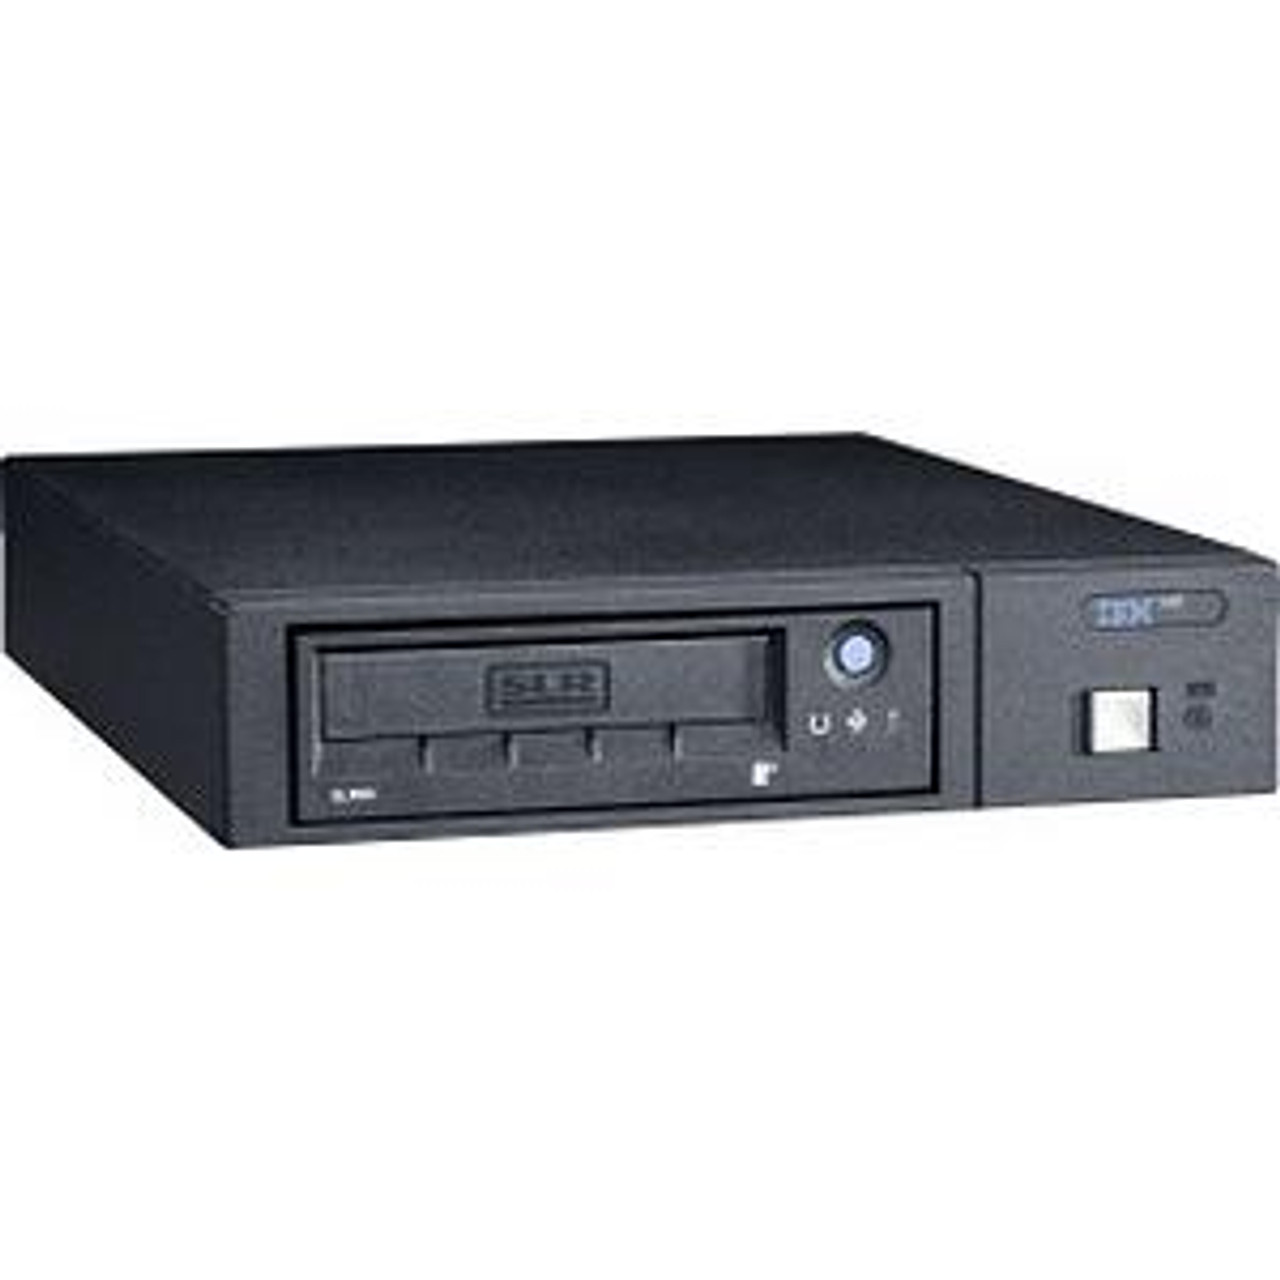 7206-220 - IBM 7206 DAT DDS-4 External Tape Drive - 20GB (Native)/40GB (Compressed) - External